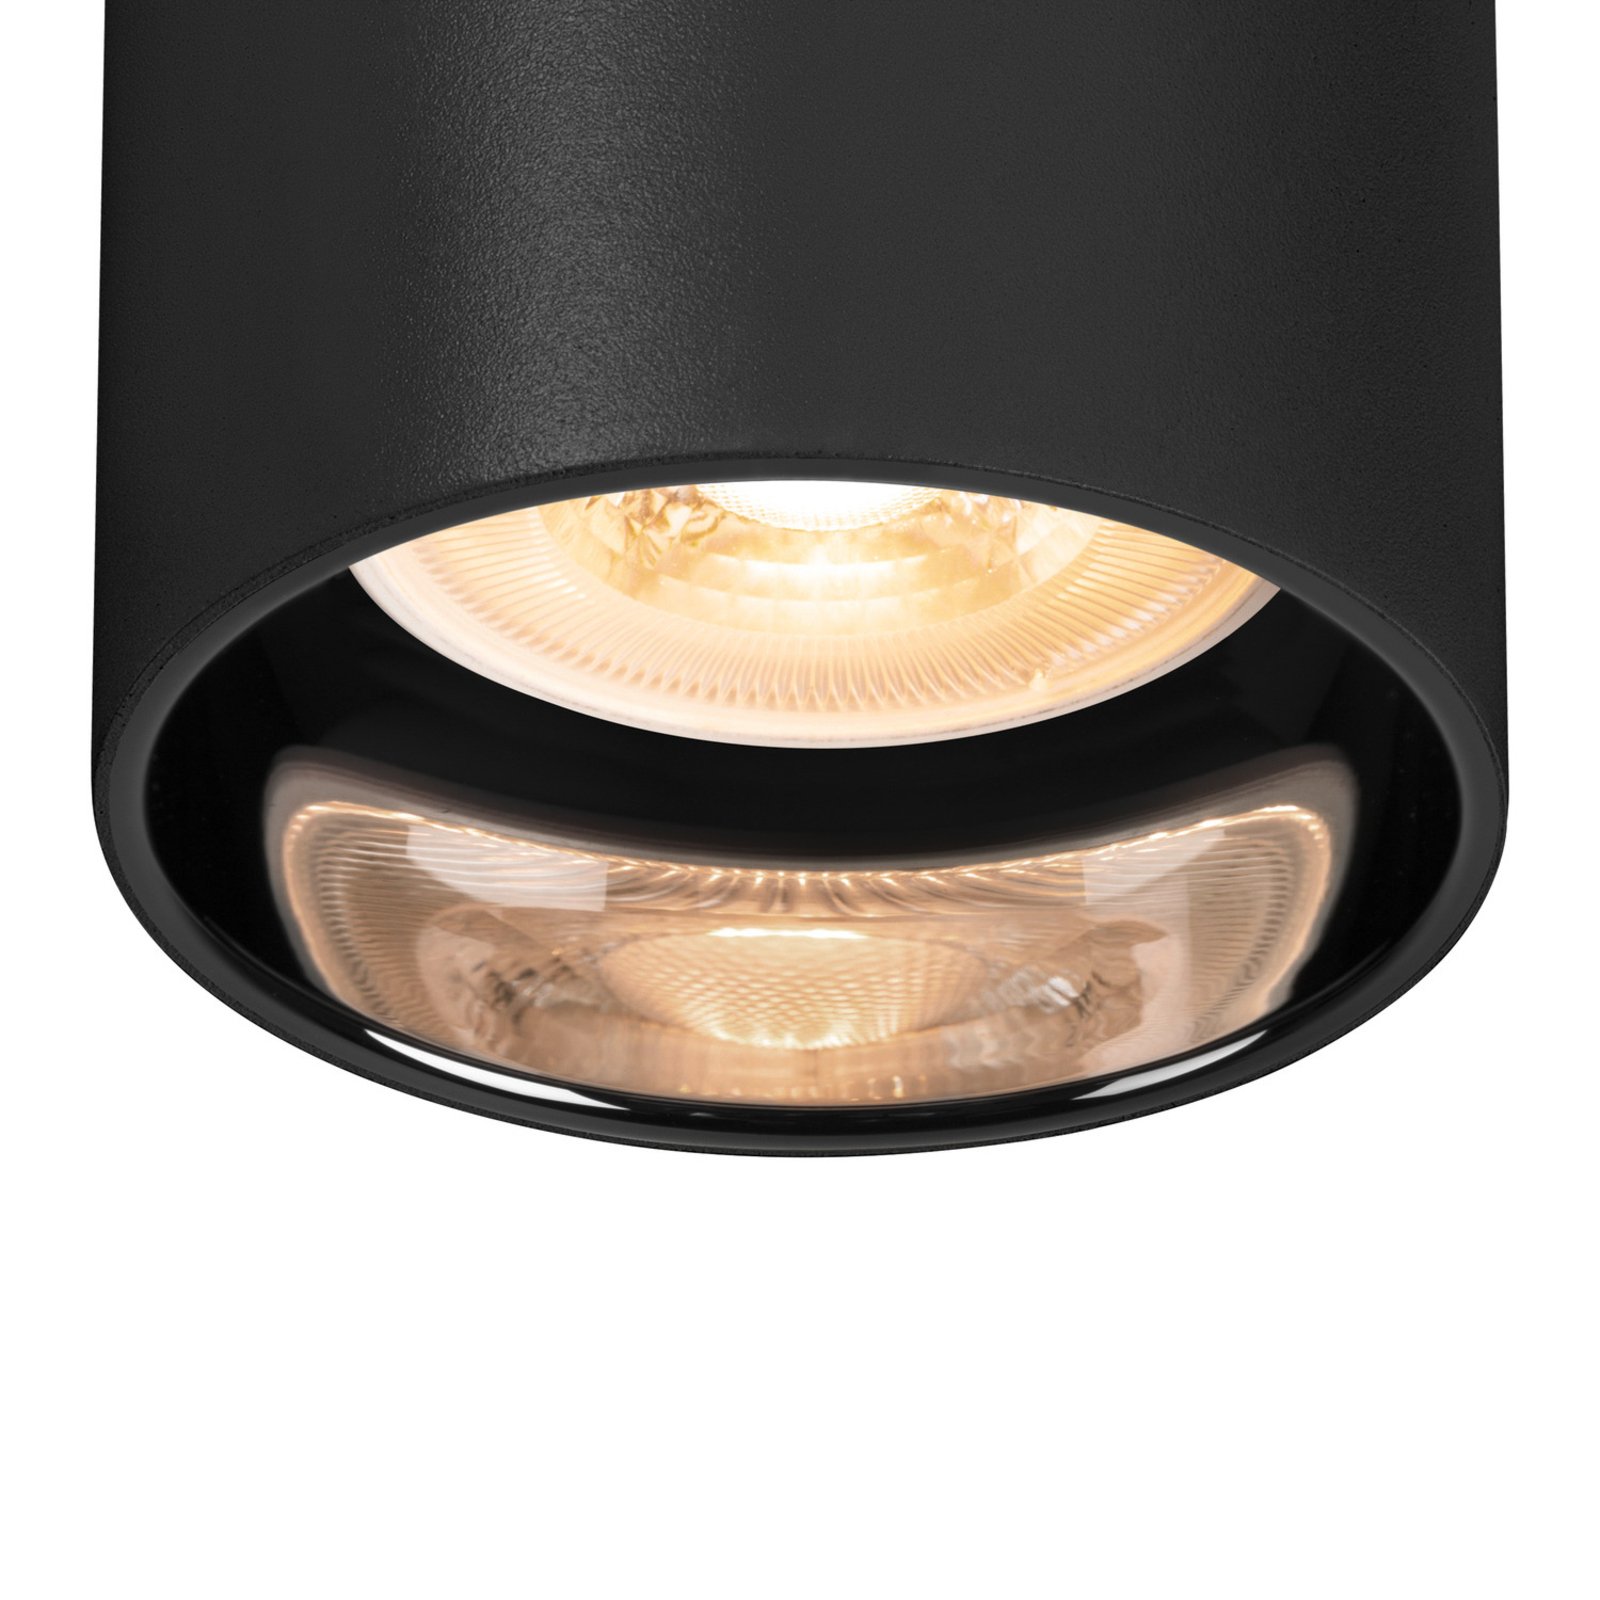 SLV Asto Tube wandlamp, GU10, up/down, zwart